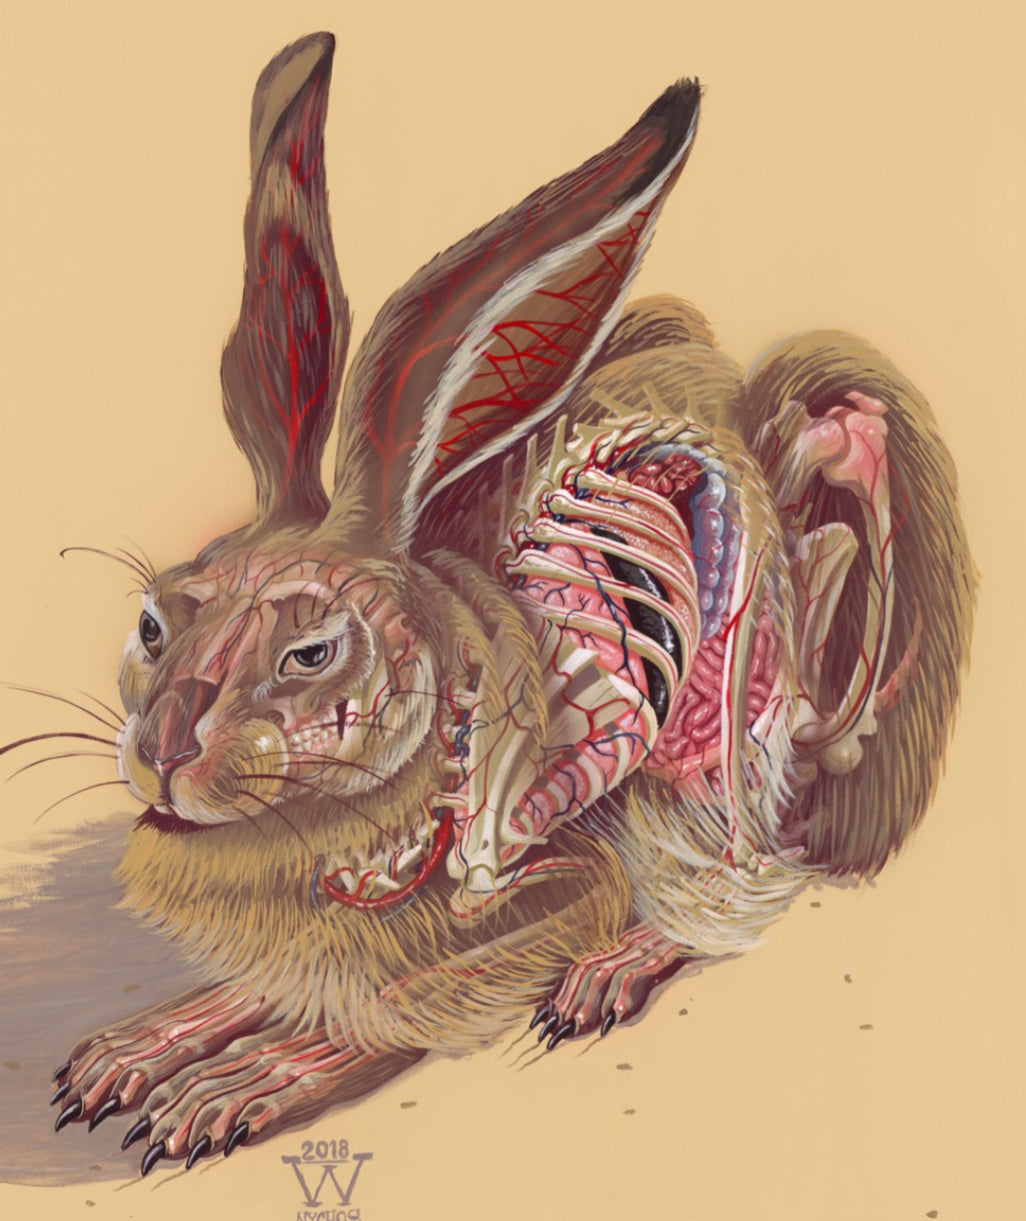 Nychos “Translucent Hare”